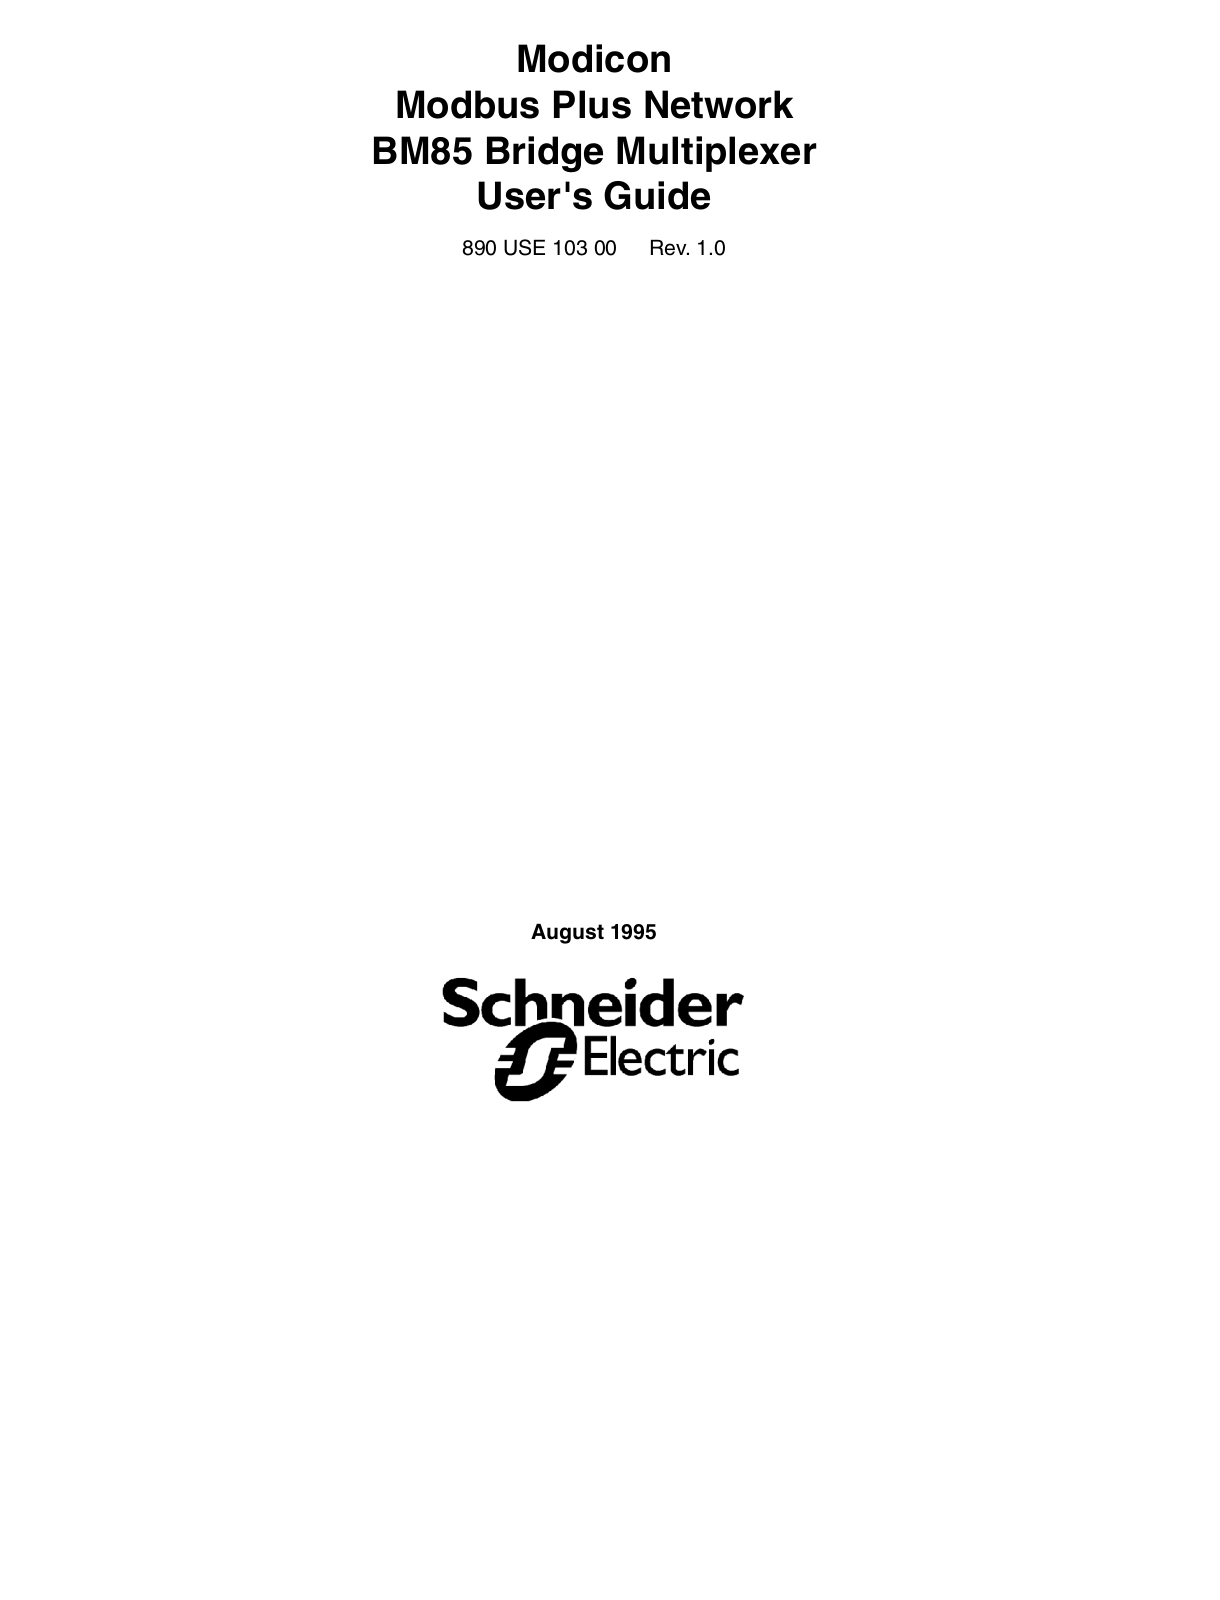 Schneider Electric BM85 User Manual